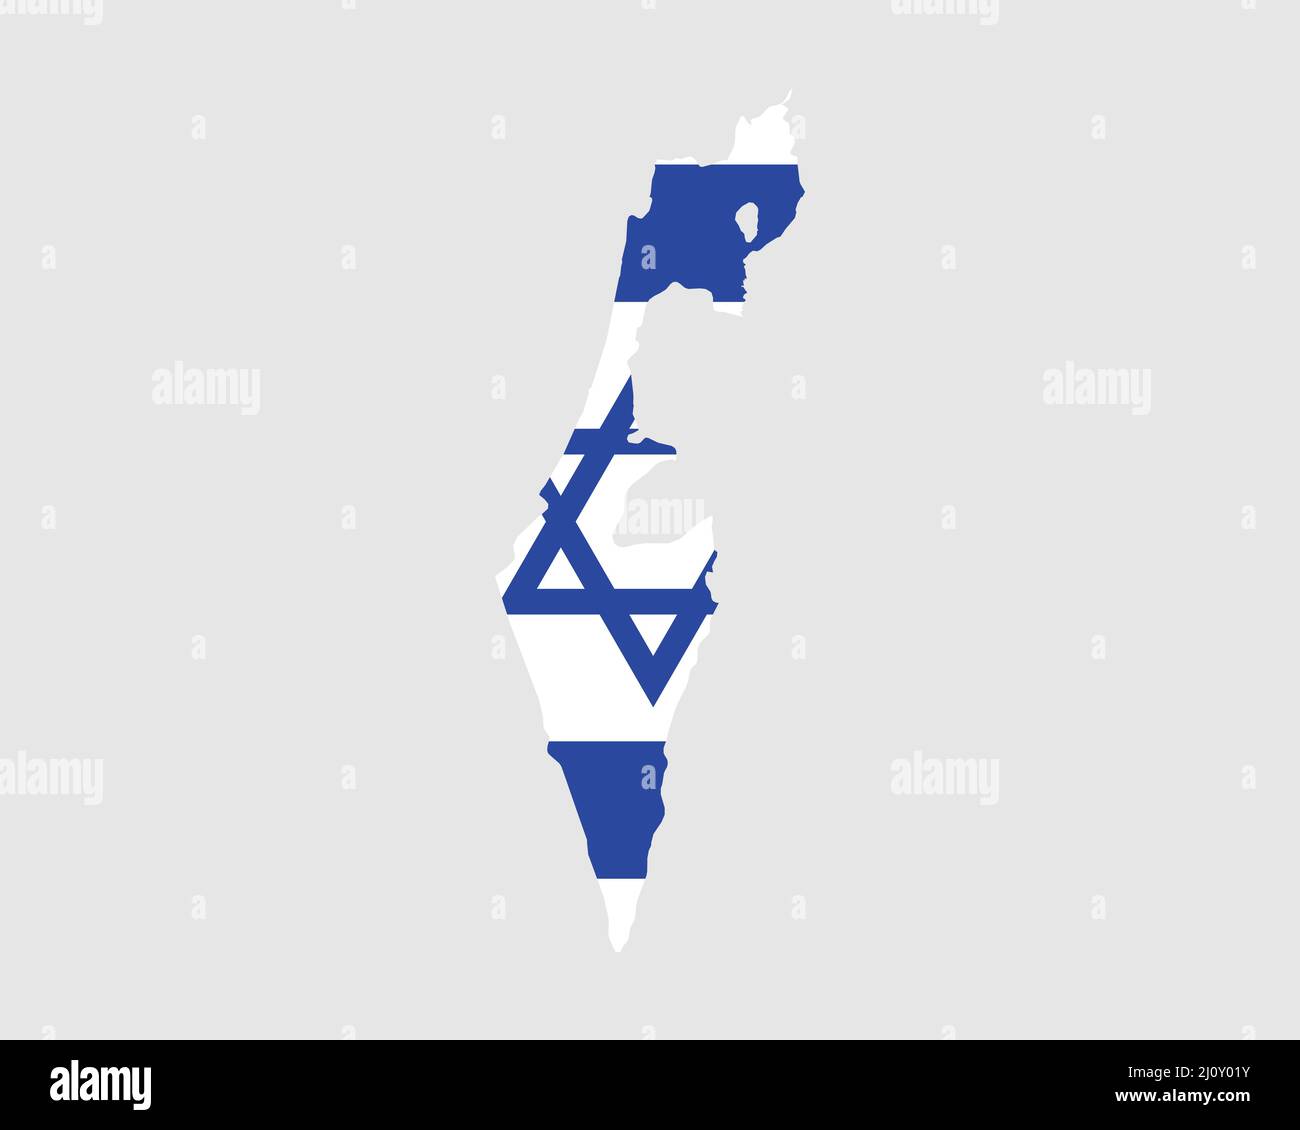 Israel Karte Flagge. Karte des Staates Israel mit dem israelischen Länderbanner. Vektorgrafik. Stock Vektor